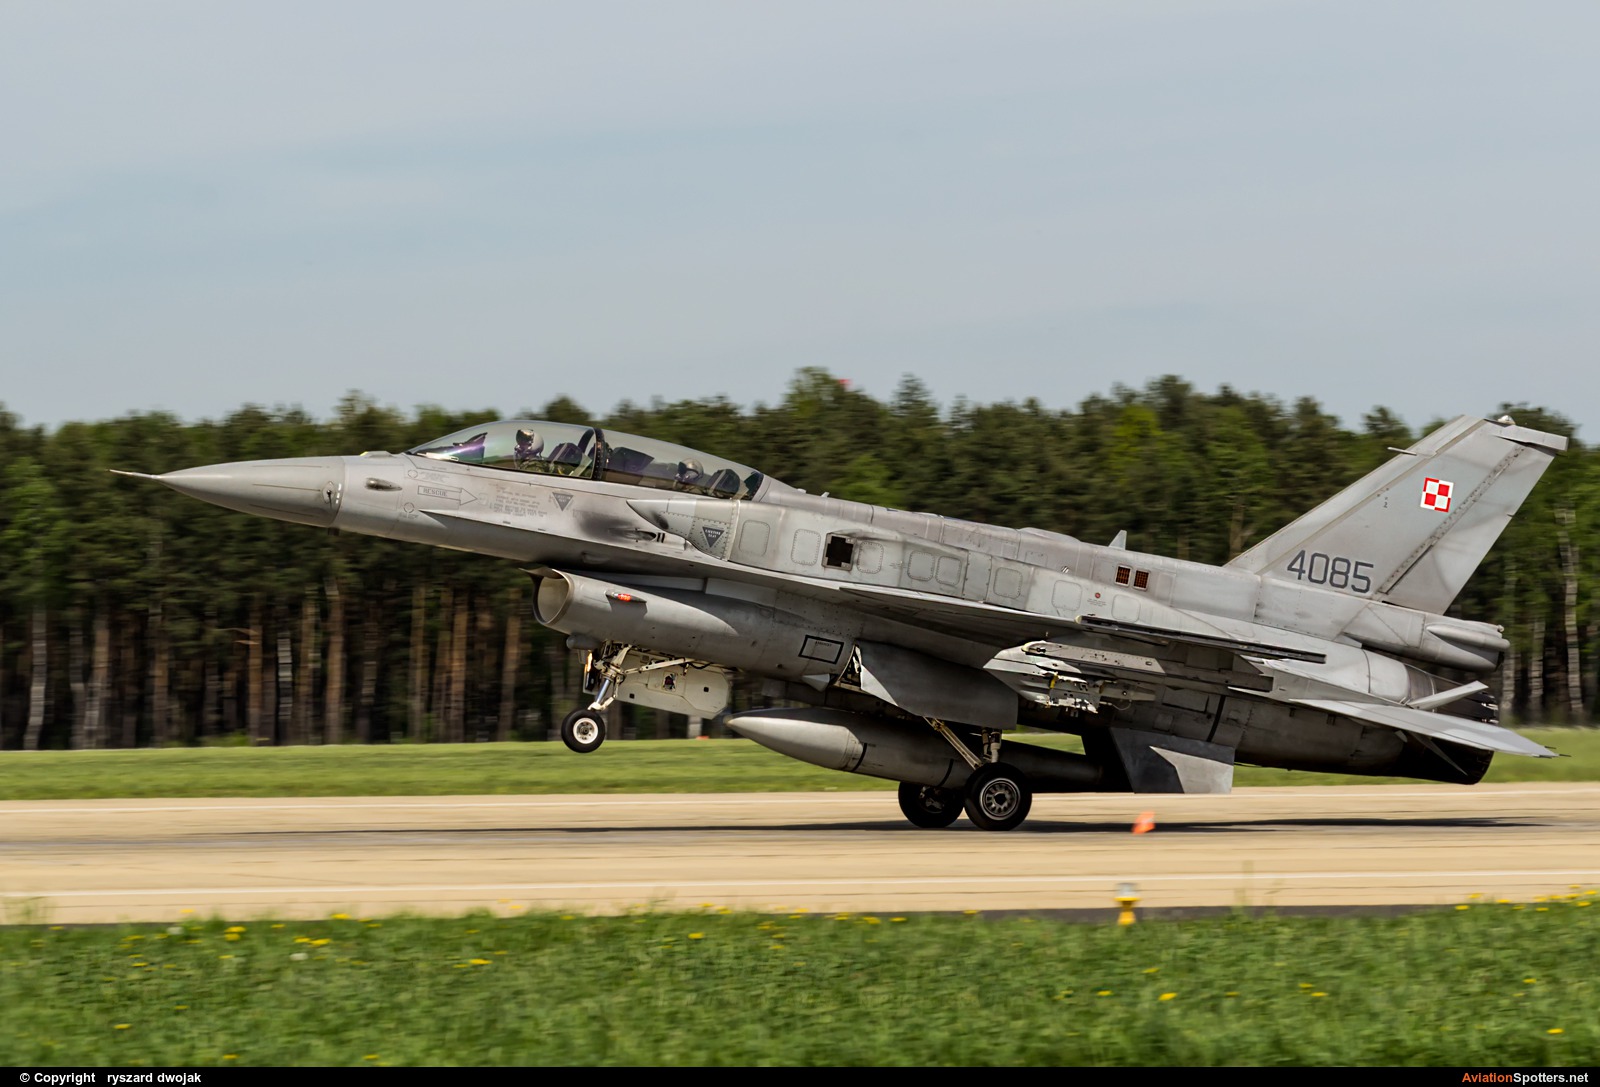 Poland - Air Force  -  (4085) By Ryszard Dwojak (ryś)